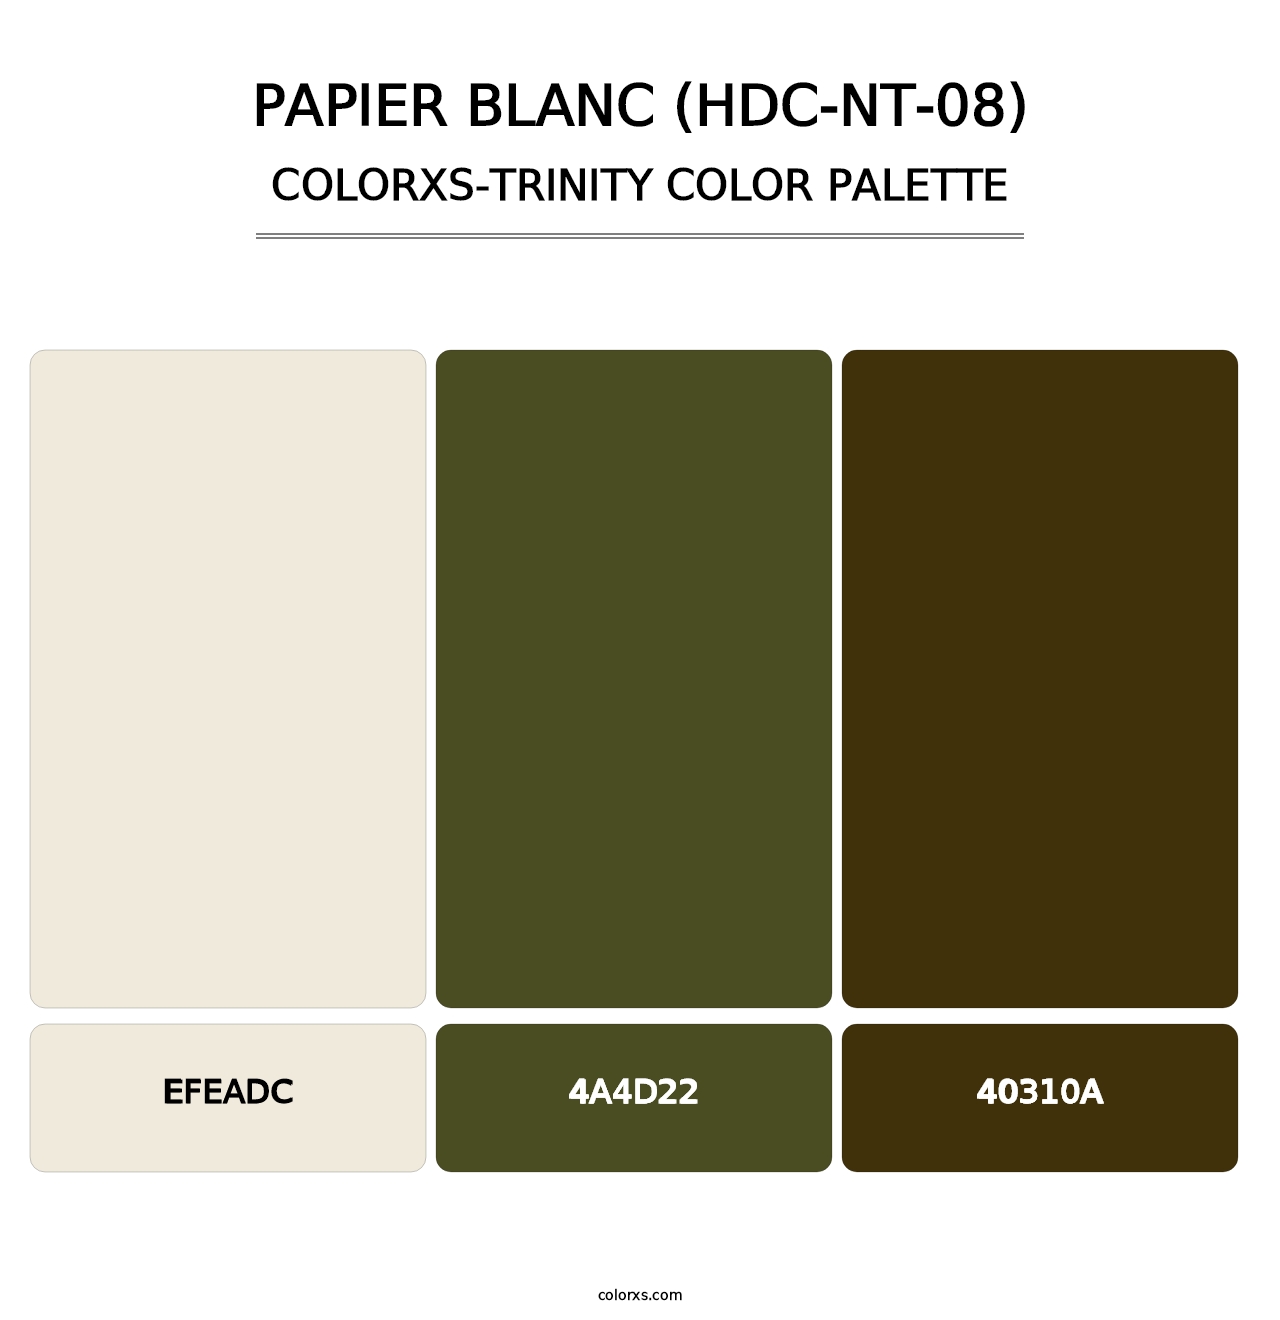 Papier Blanc (HDC-NT-08) - Colorxs Trinity Palette